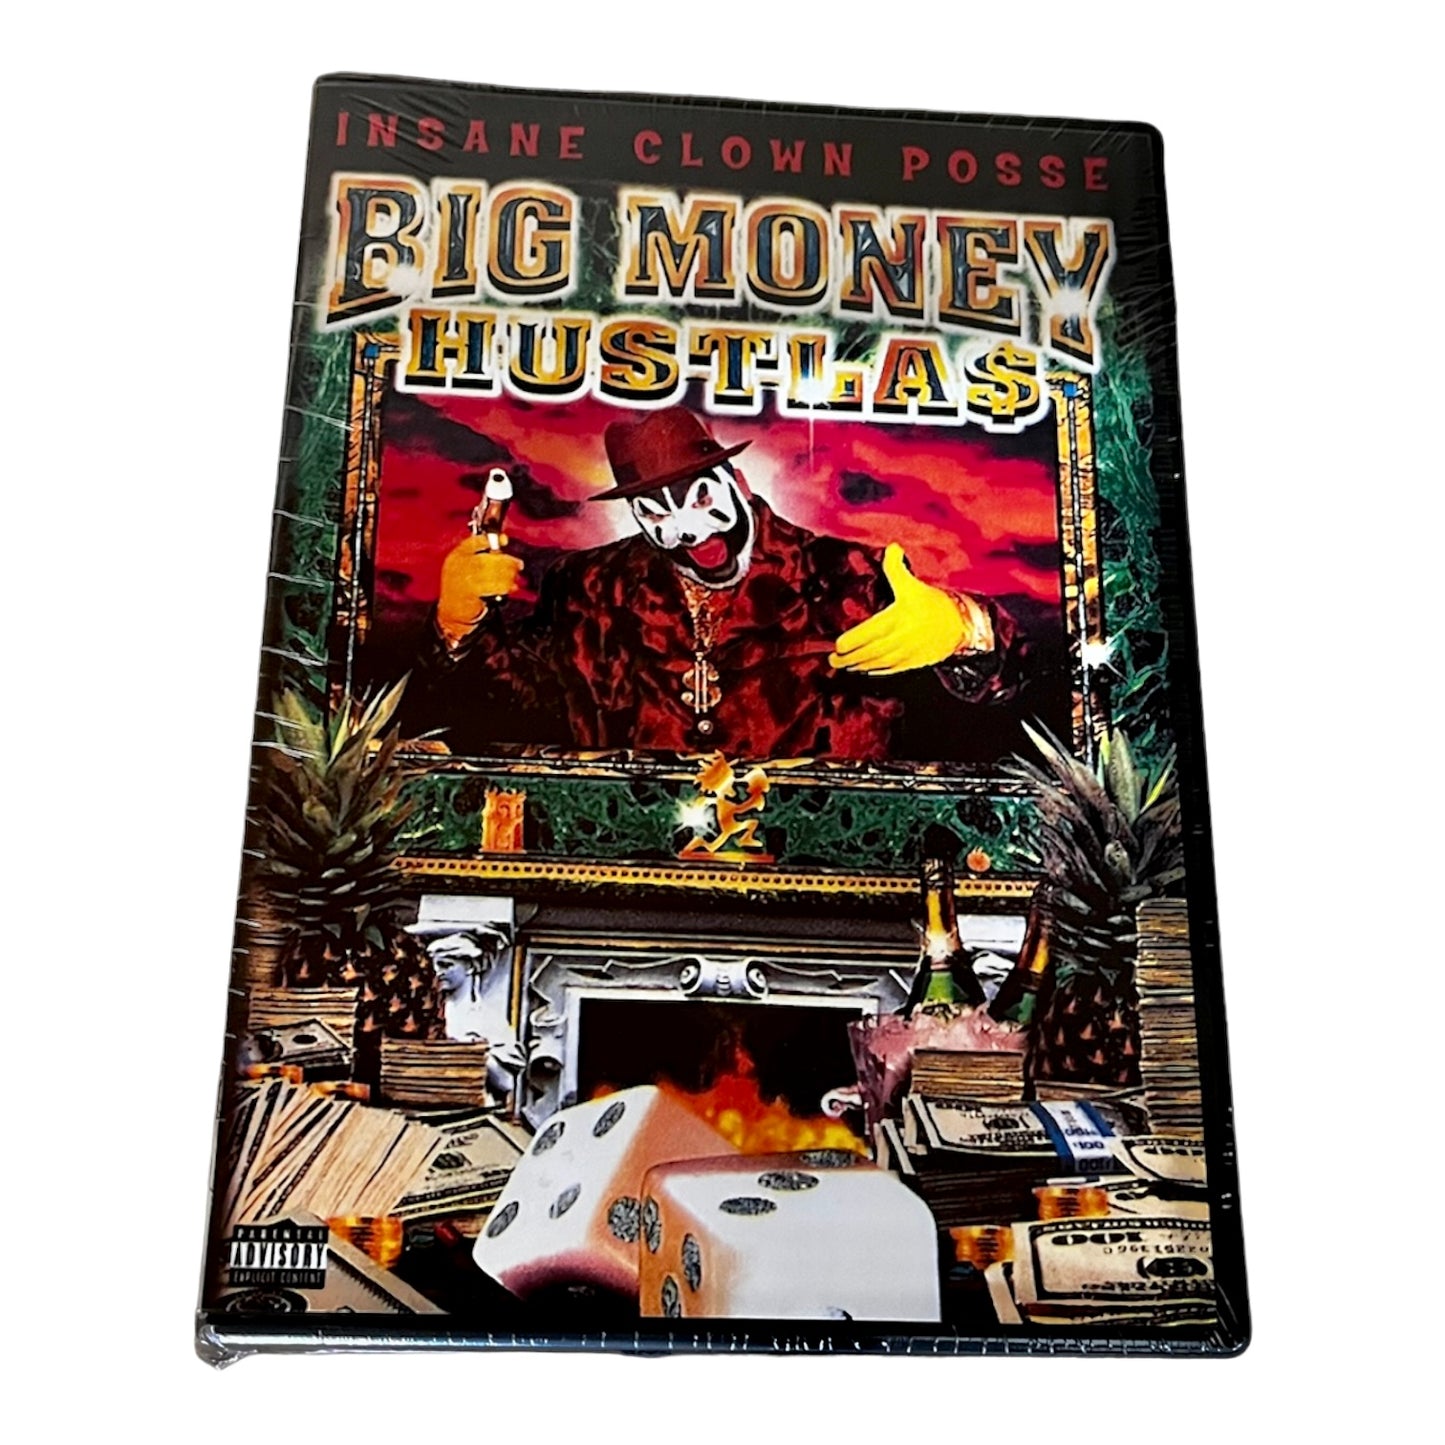 Big Money Hustlas DVD